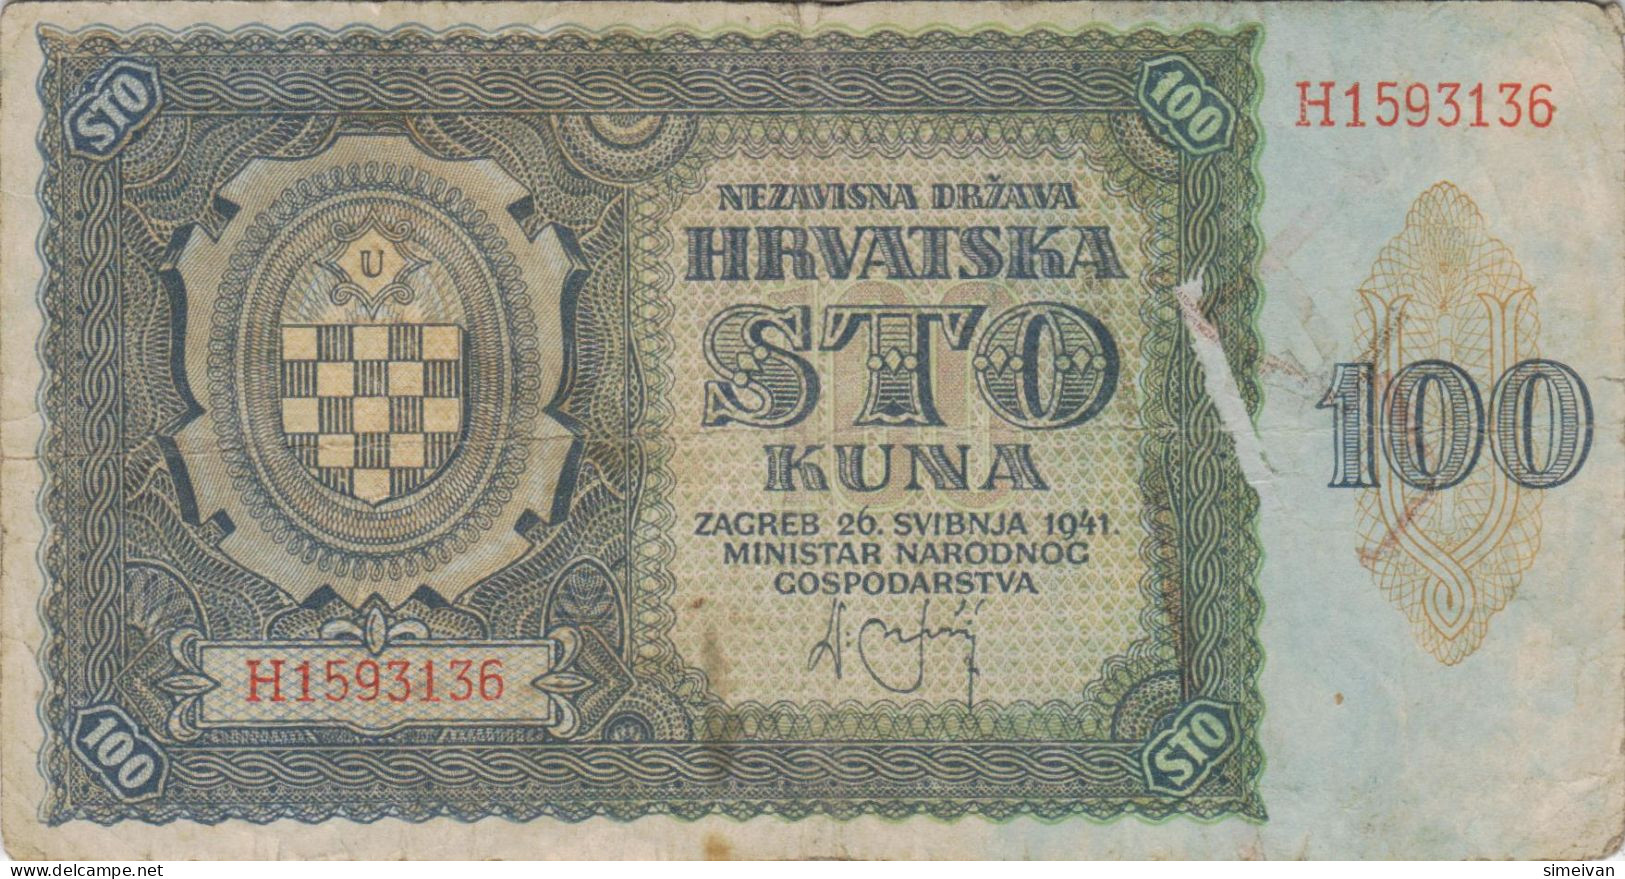 Croatia 100 Kuna 1941 P-2a Banknote Europe Currency Croatie Kroatien #5320 - Croatia